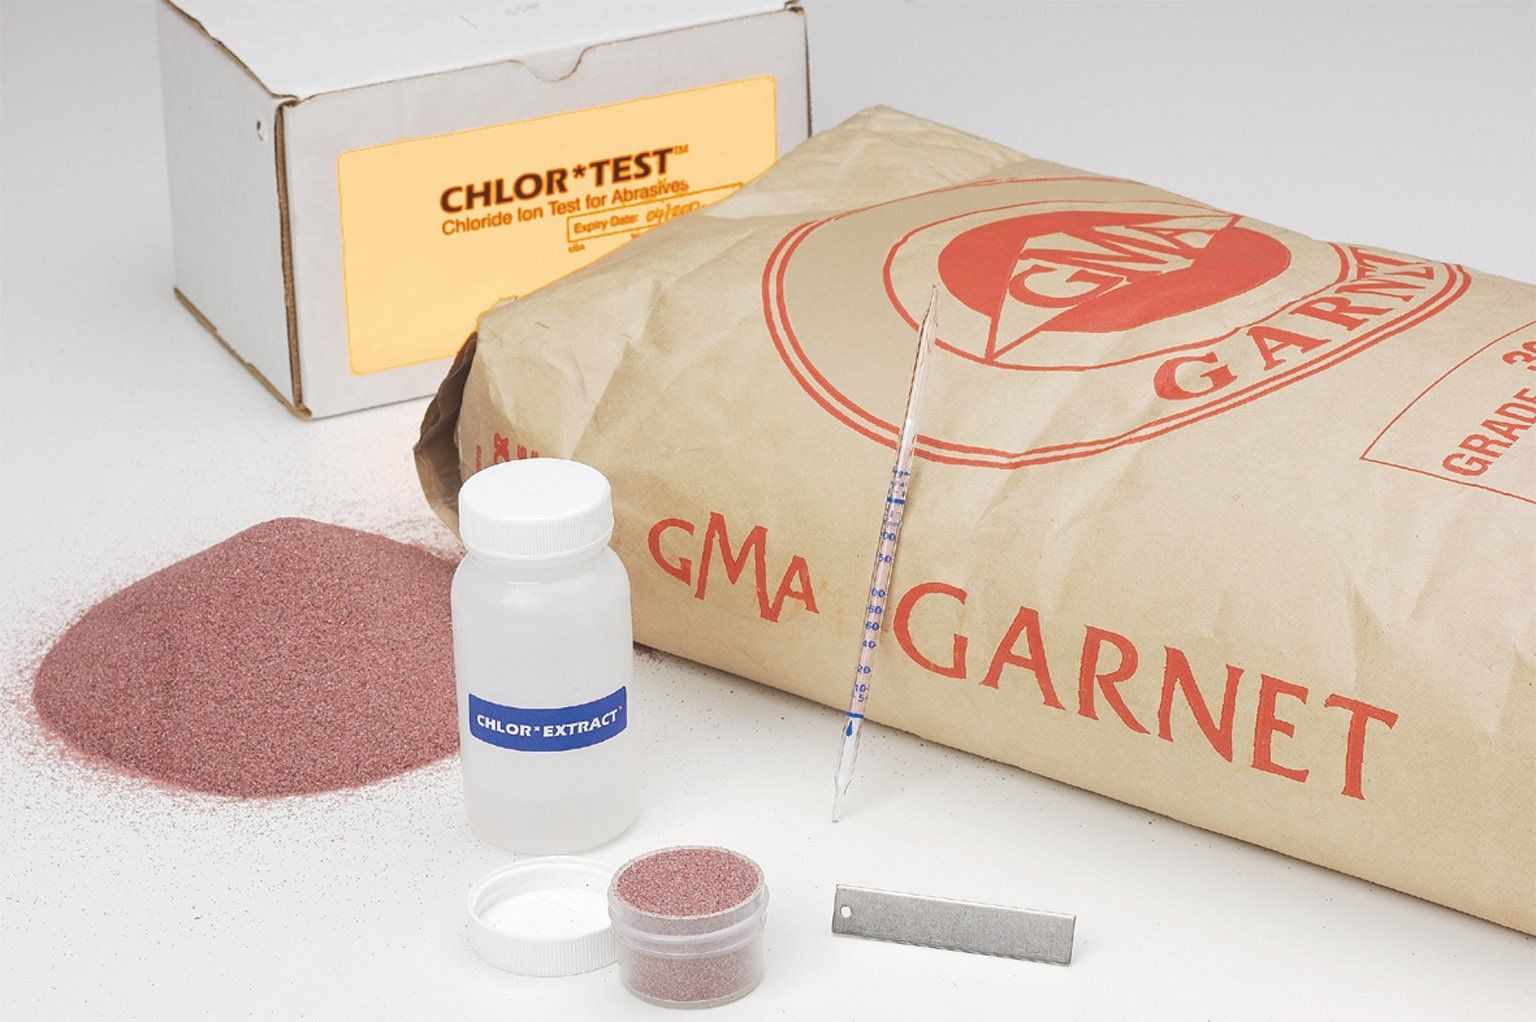 ChlorCheck Chlor*Test Abrasive Chloride Test Kit